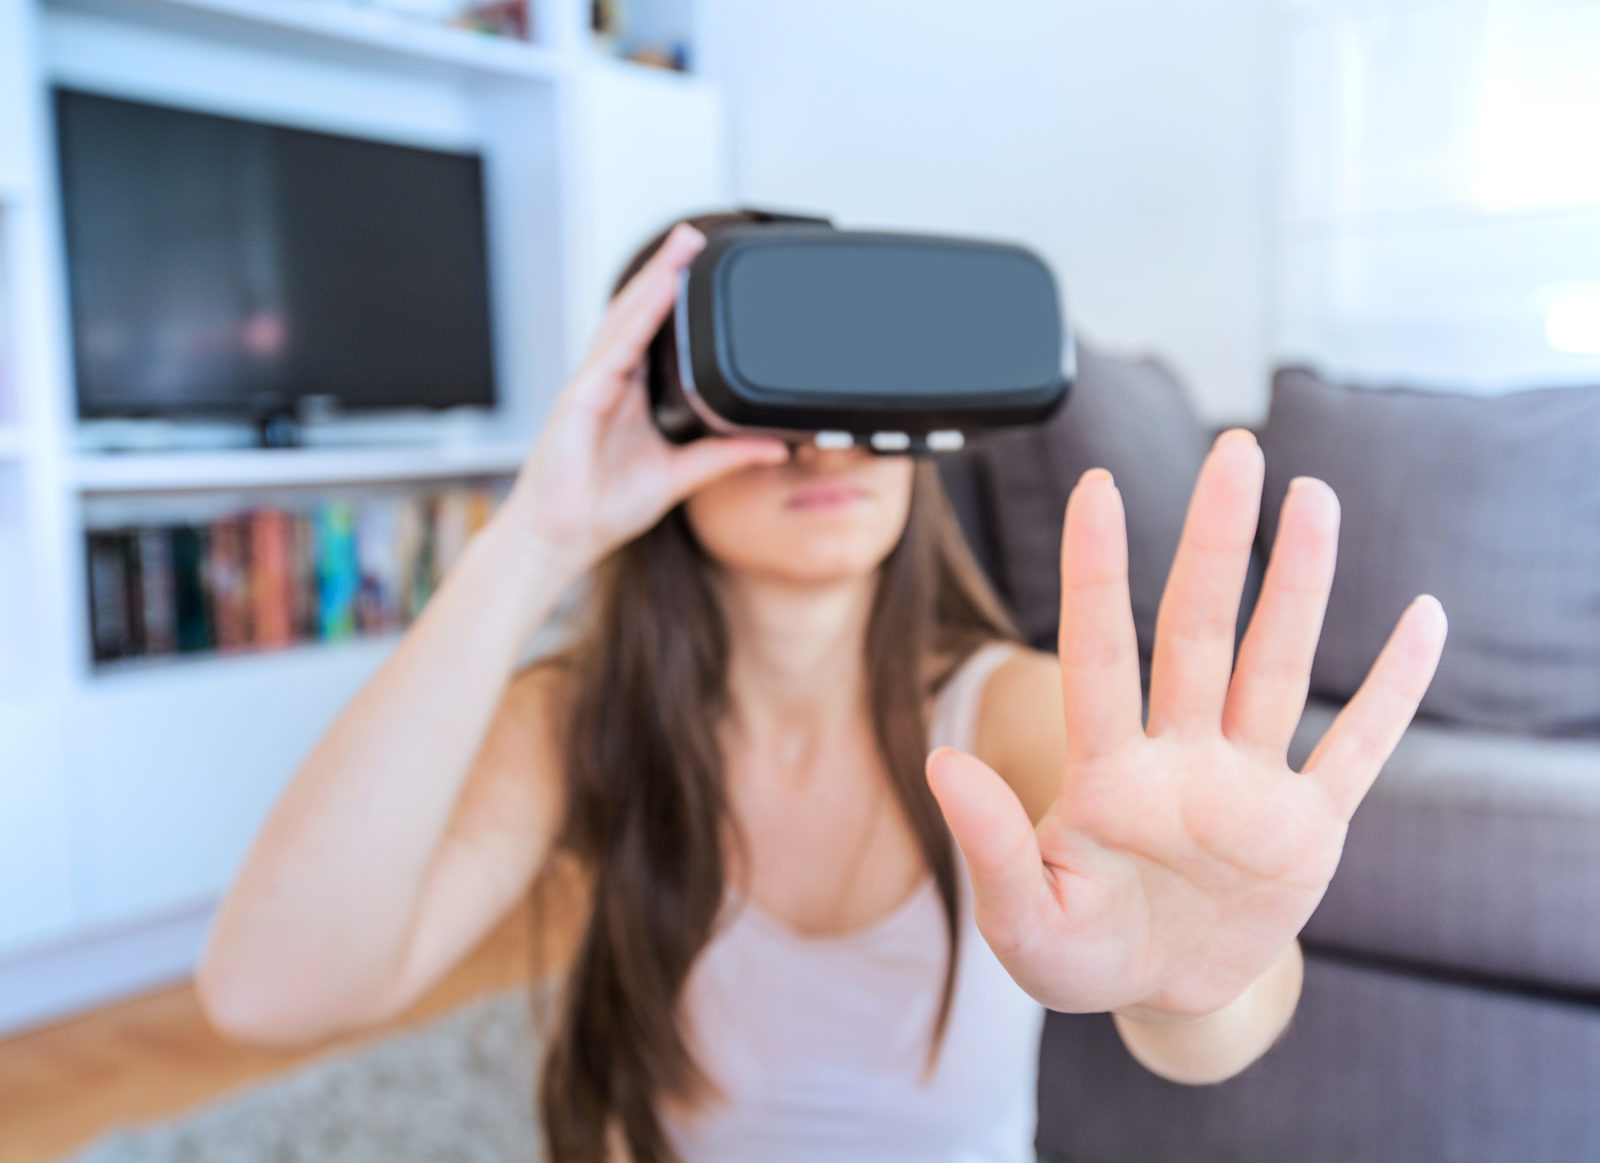 virtual reality glasses woman home